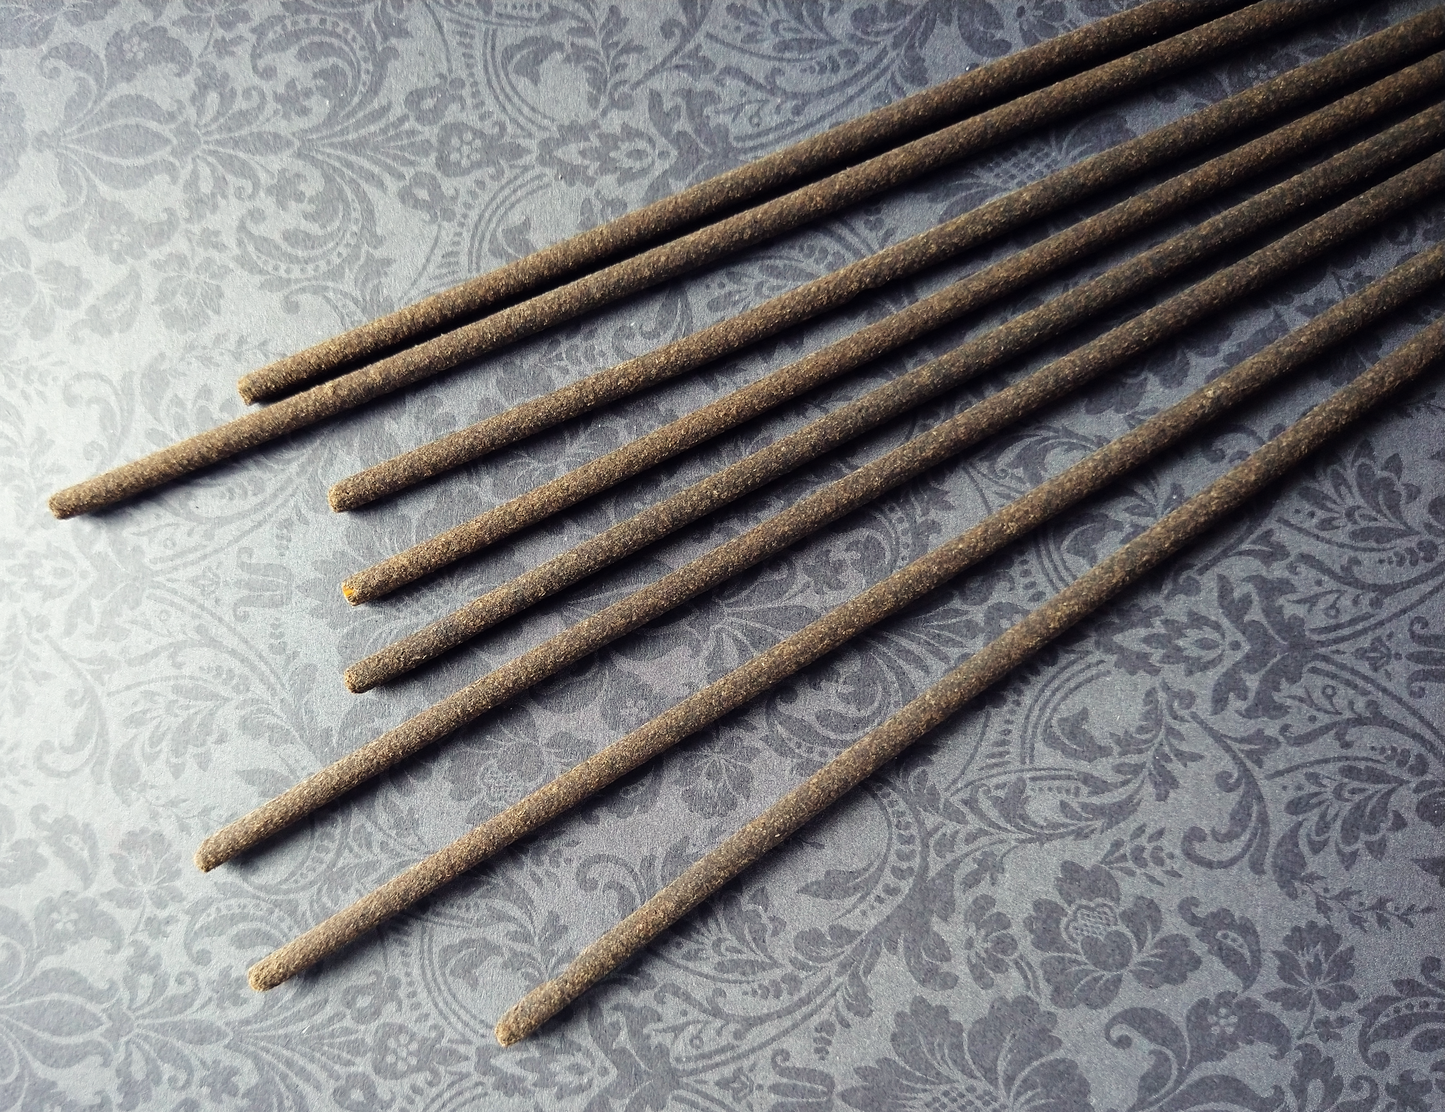 Eight (8) incense sticks on a black damask background.